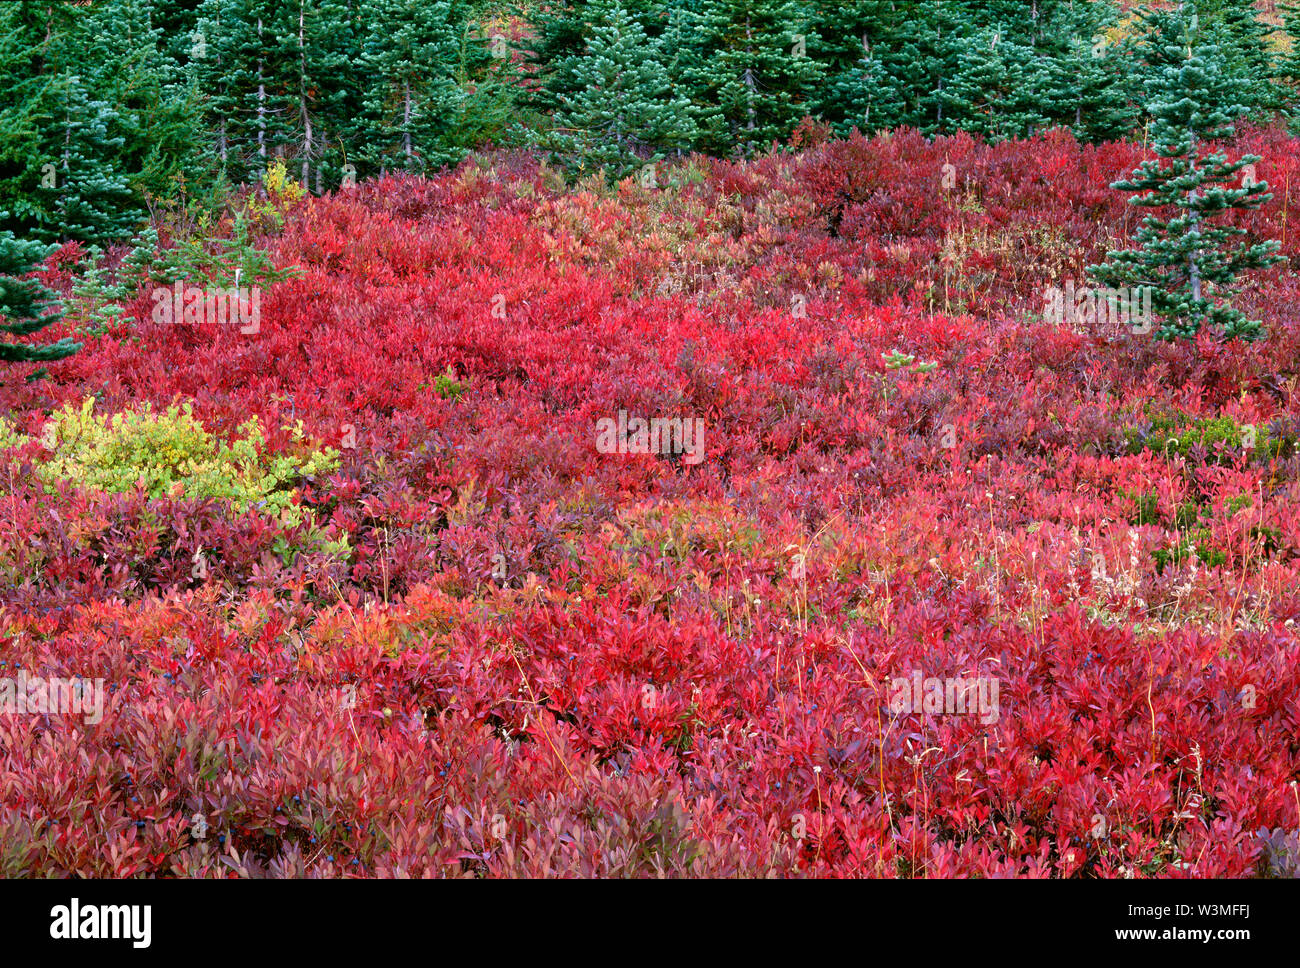 USA, Washington, Mt. Rainier National Park, Fall-colored meadow of huckleberry (Vaccinium spp.) and small conifers, Paradise area. Stock Photo